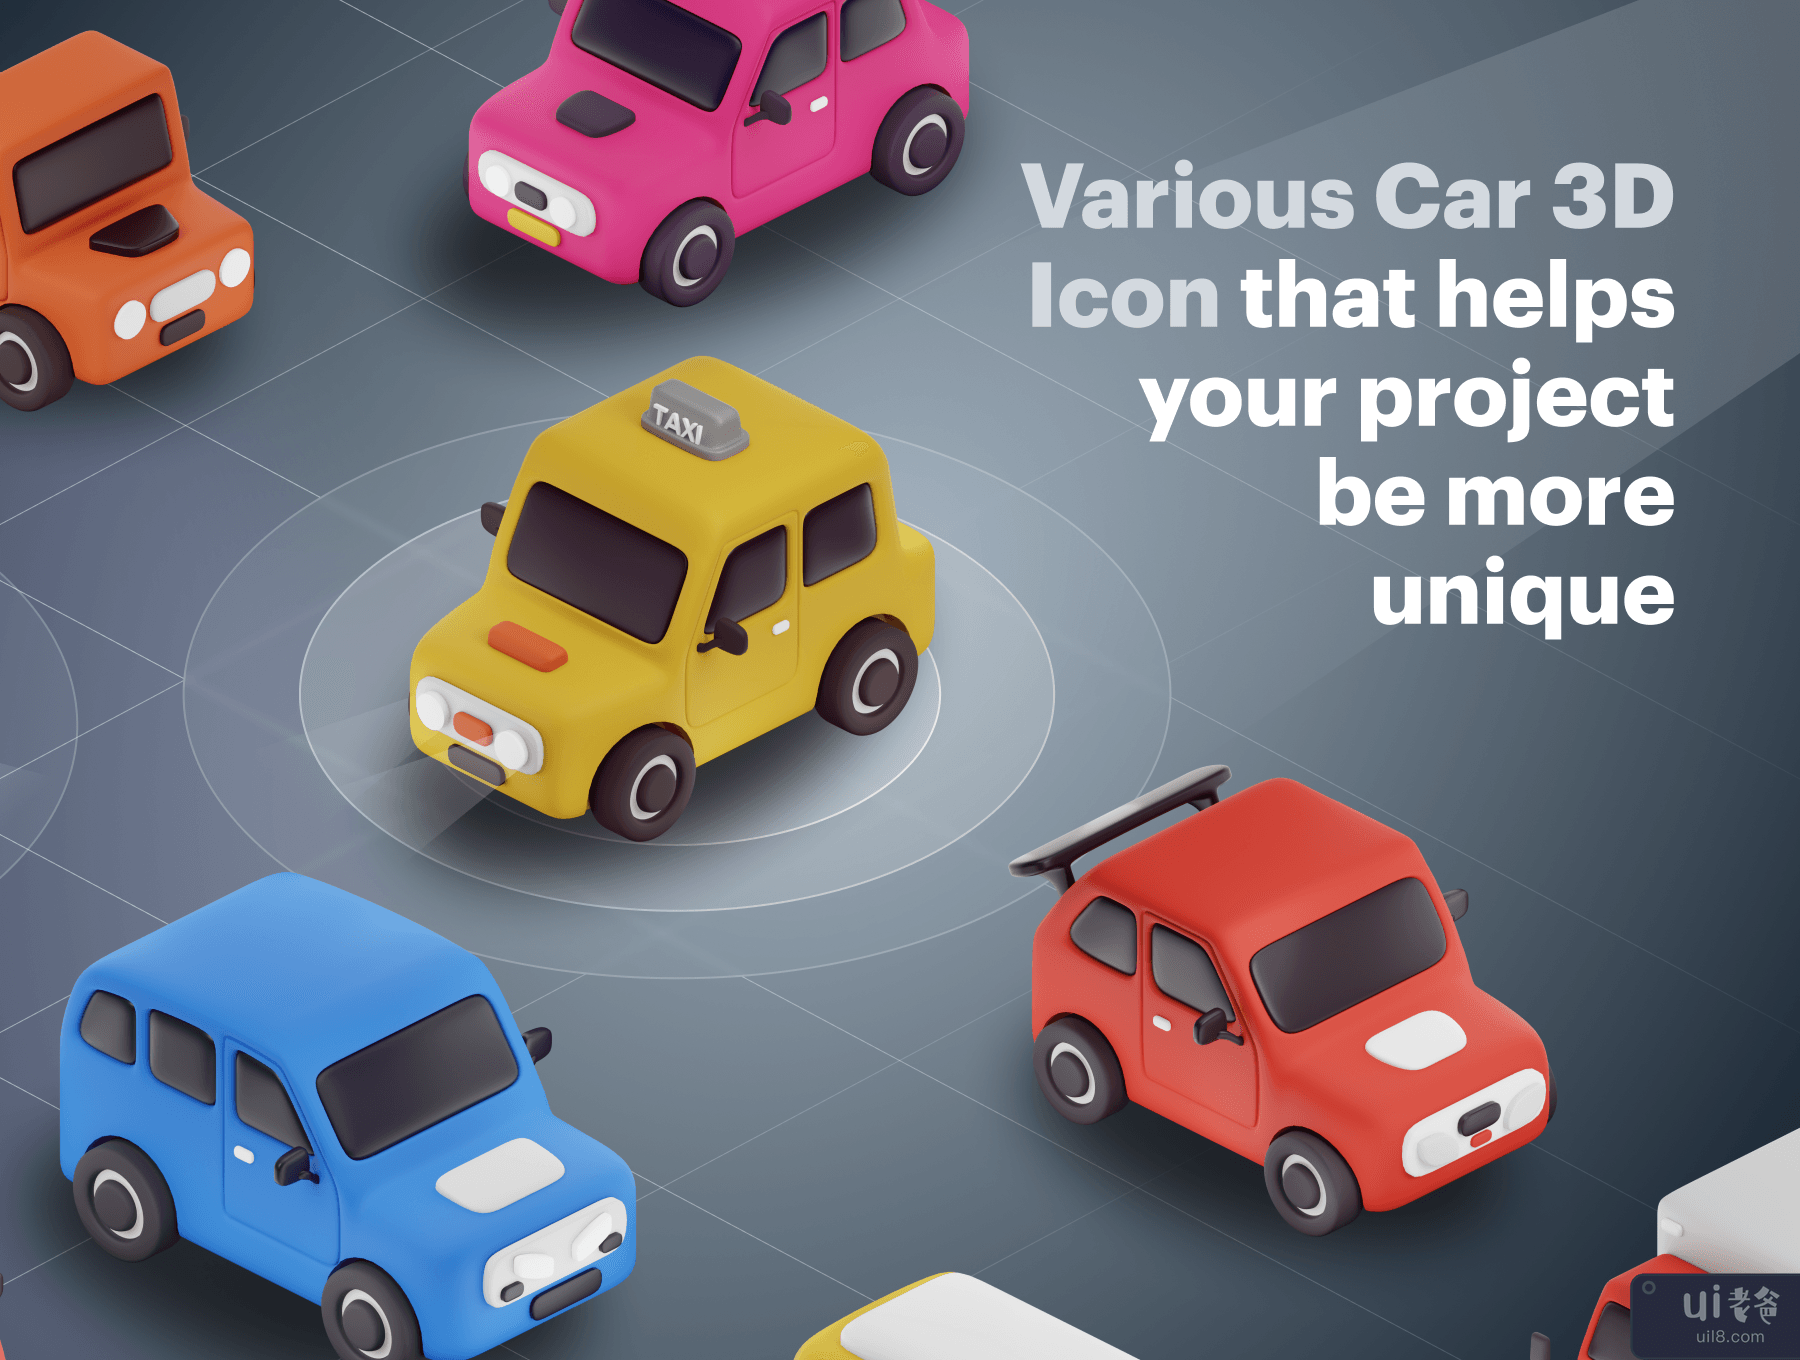 Carly - 汽车和交通工具 3D 图标集 (Carly - Car & Vehicle 3D Icon Set)插图6